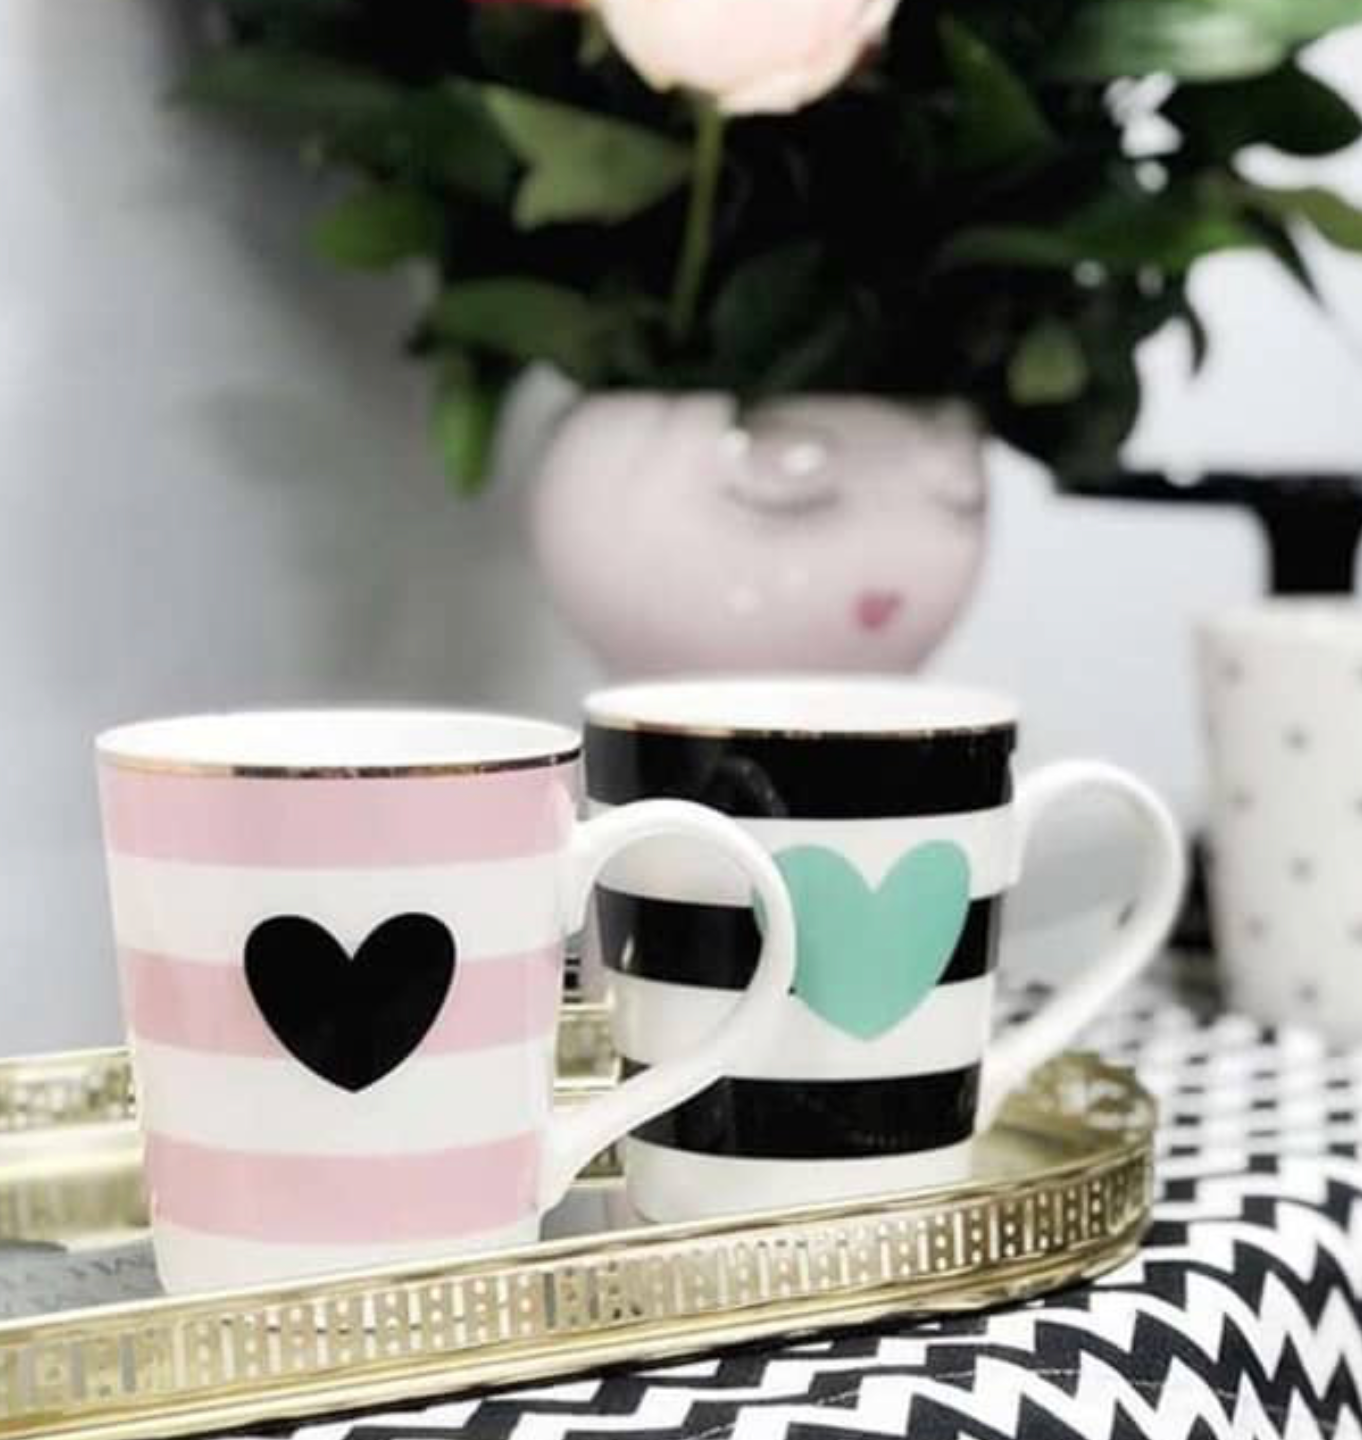 Miss Etoile Heart Mug Pink Stripes